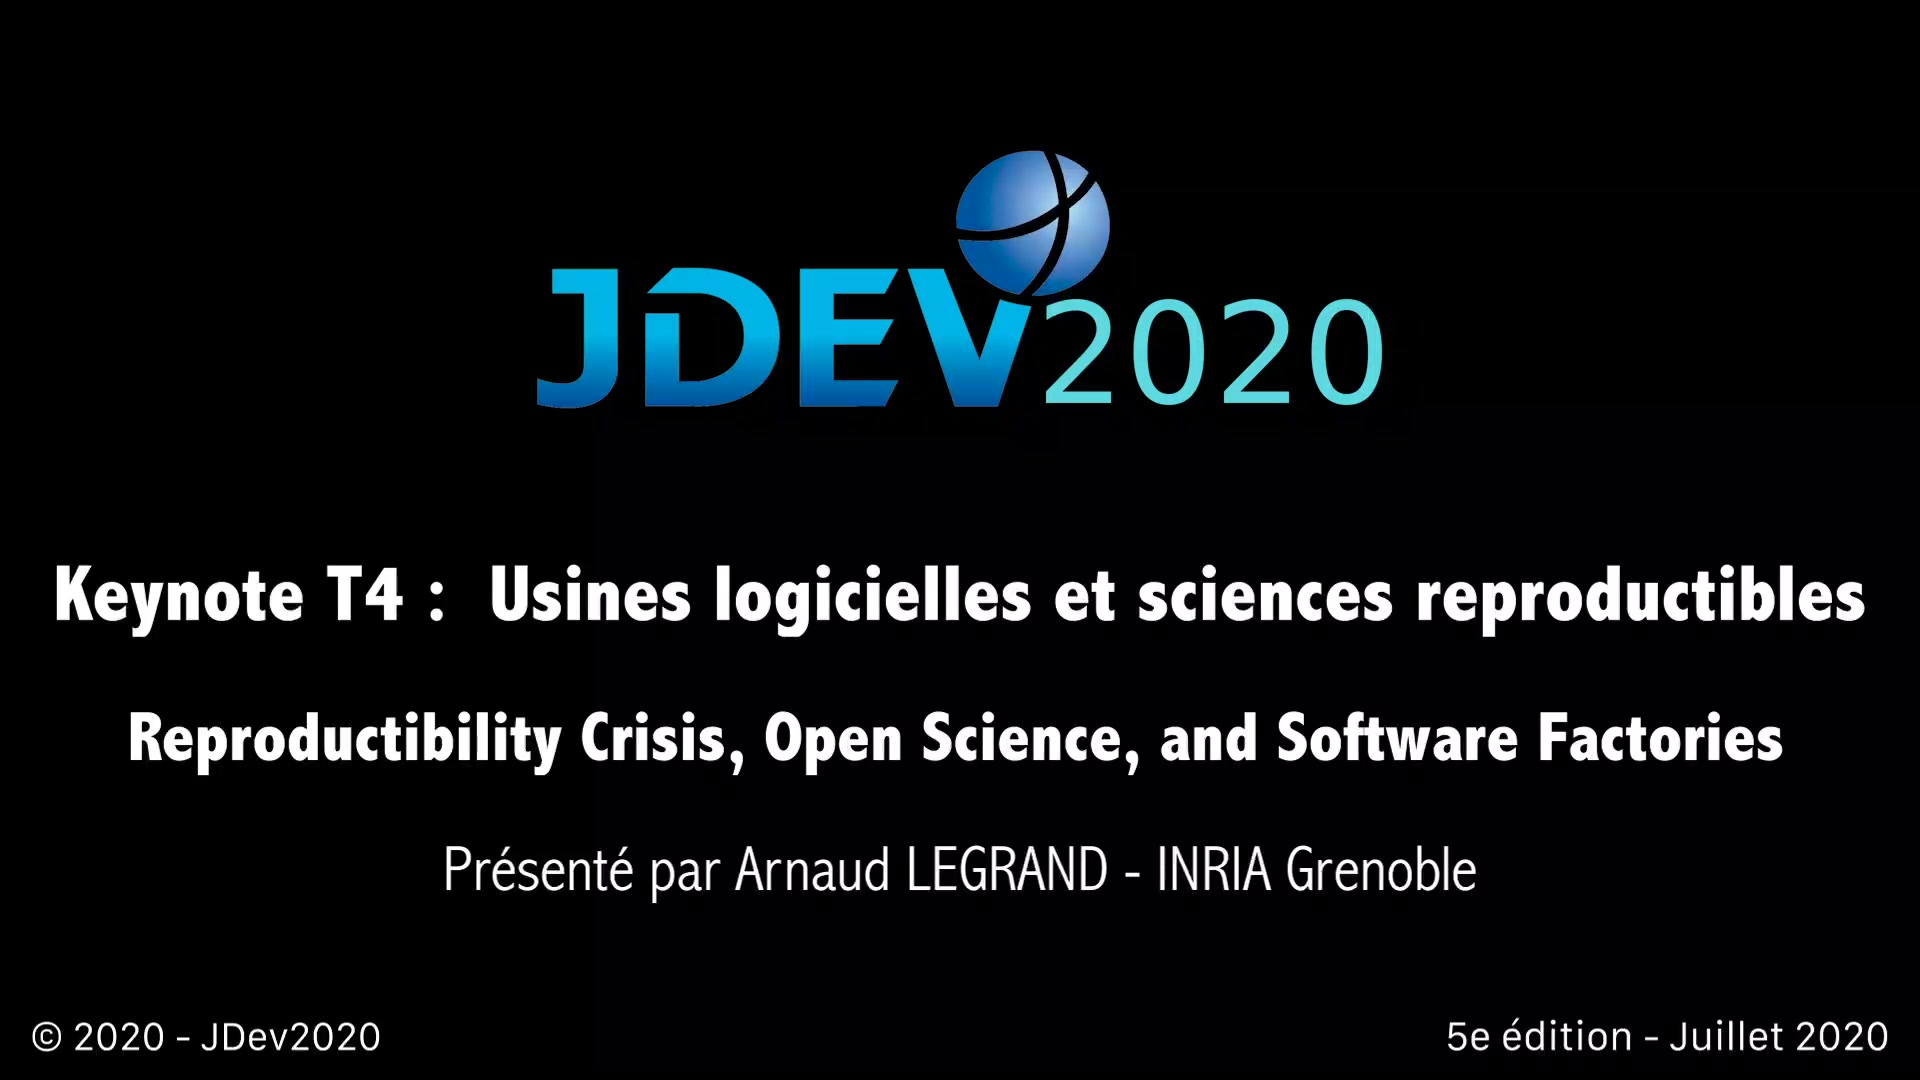 JDev2020 : T4 : Keynote : Reproductibility Crisis, Open Science, and Software Factories (en français)